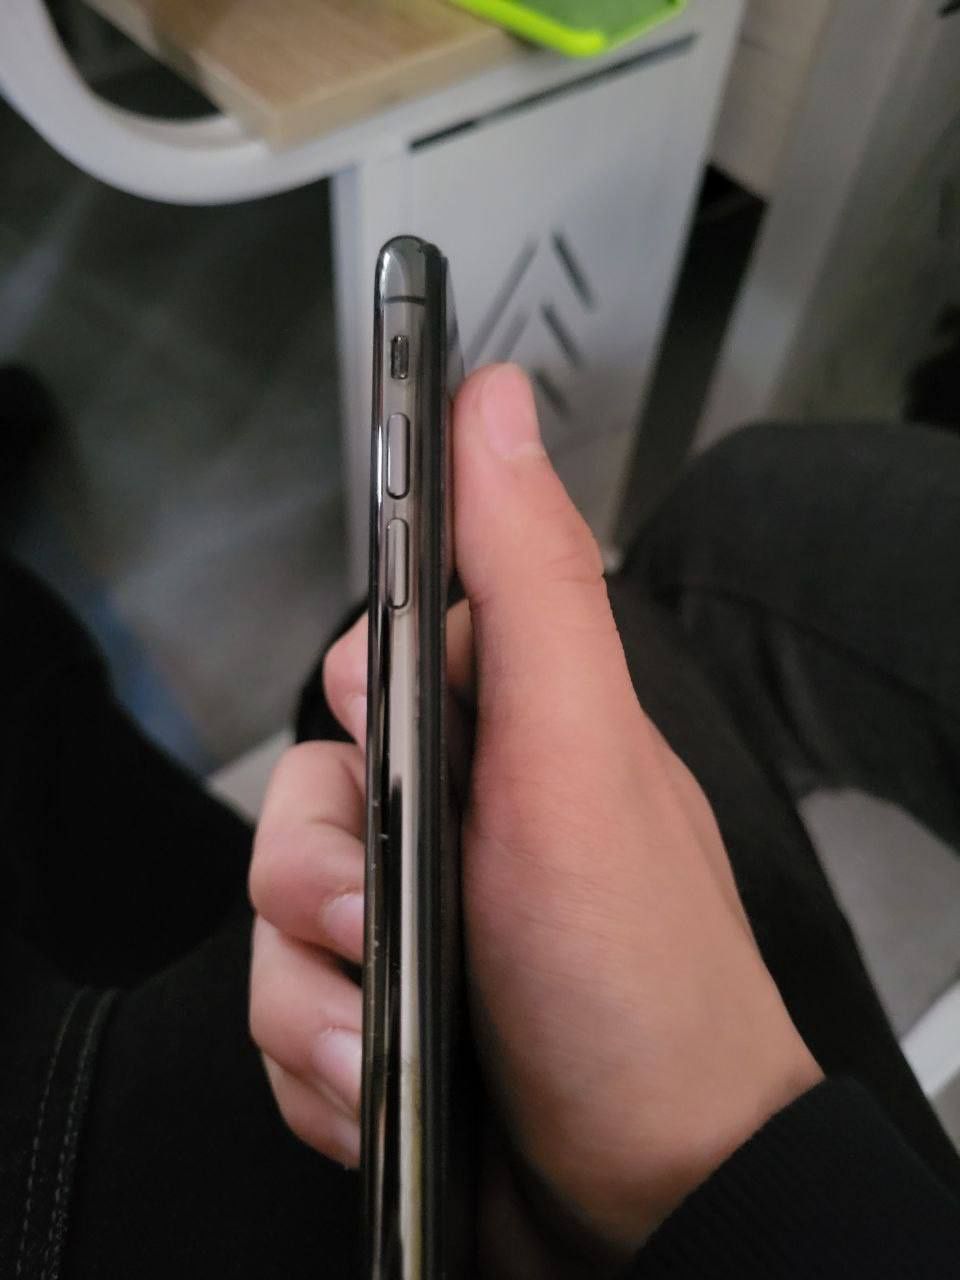 Iphone x 64gb space grey